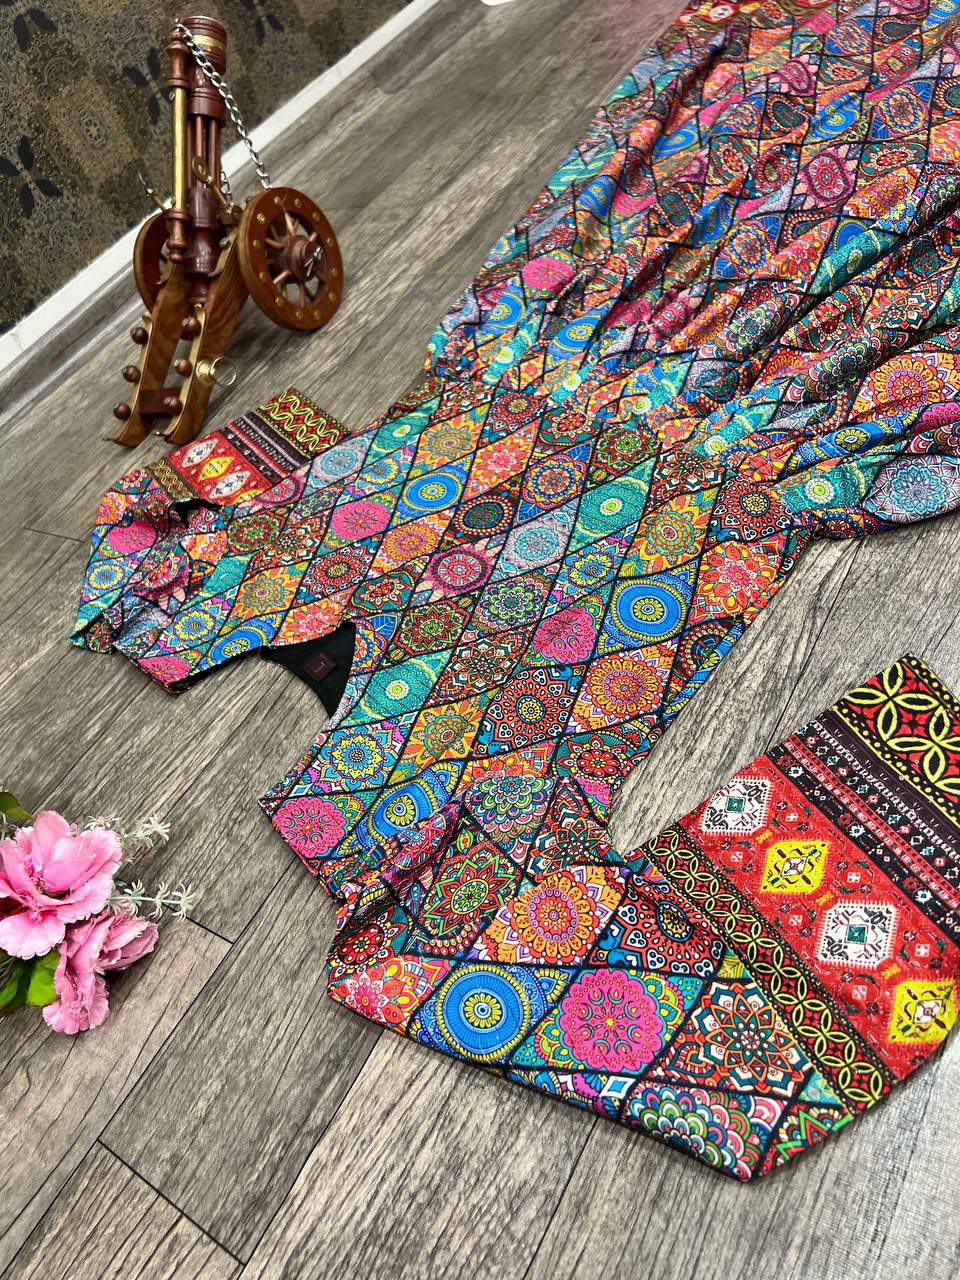 Impressive Multi Color Muslin Anarkali Gown For Women